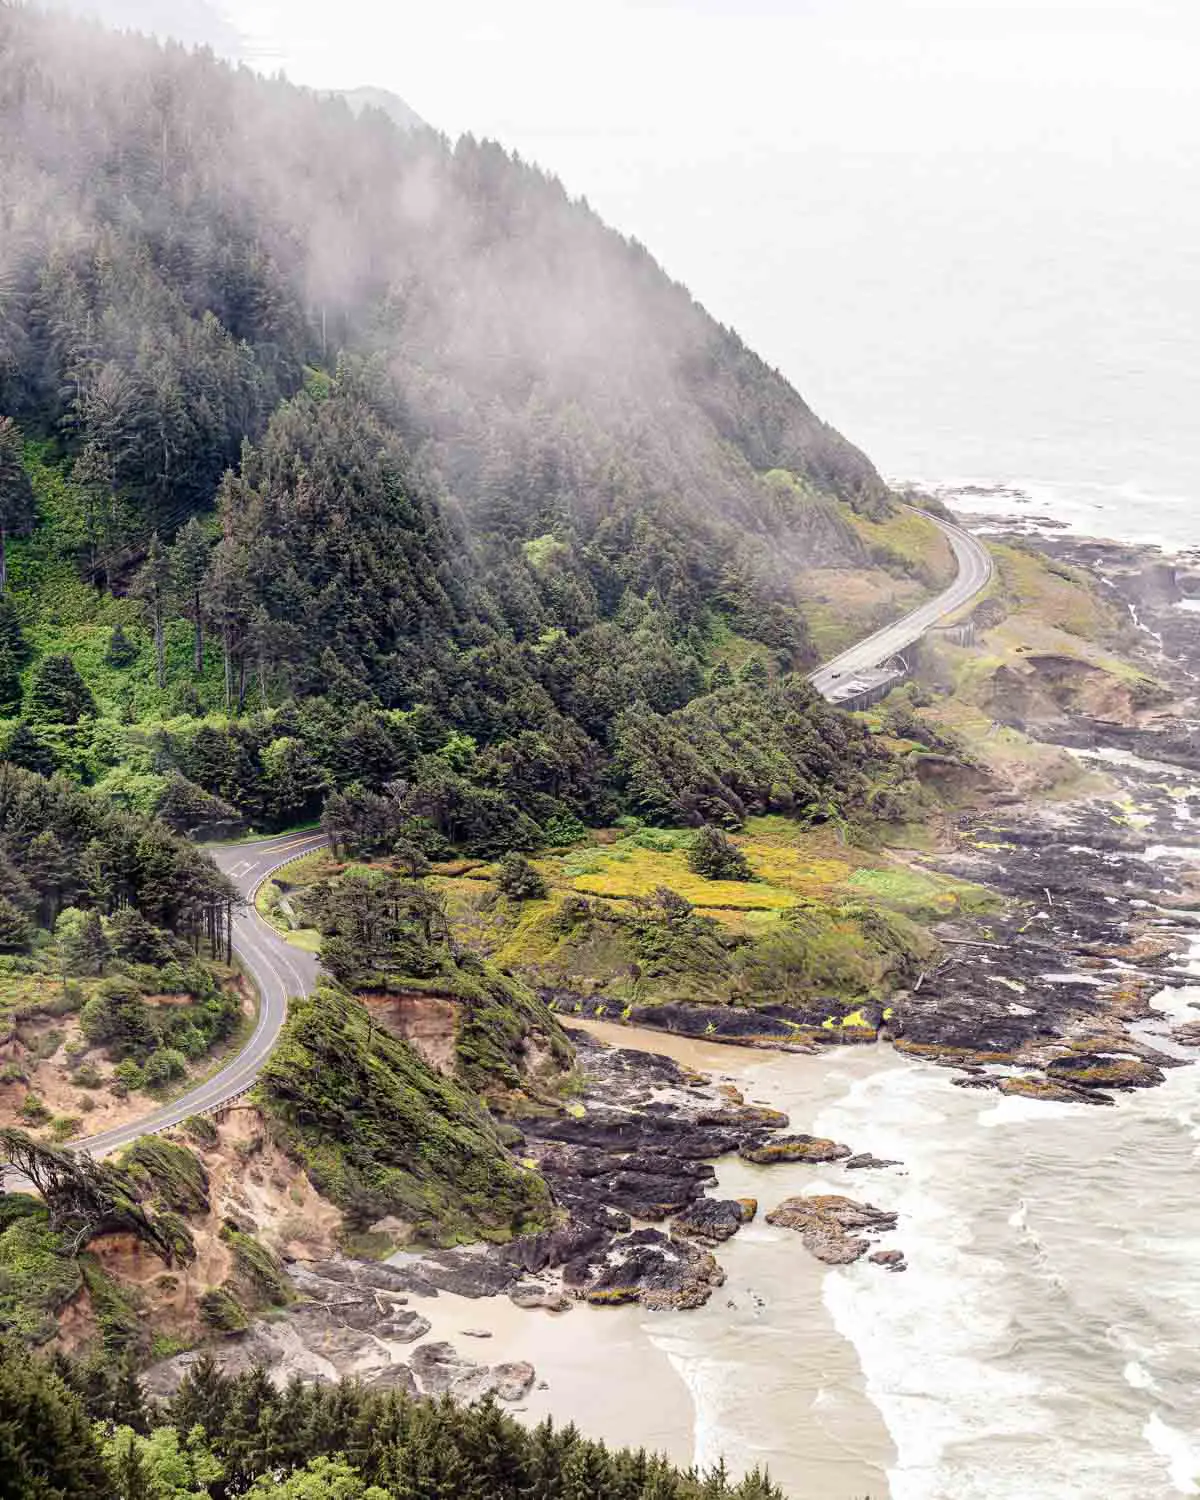 A road winding along coastal cliffs.